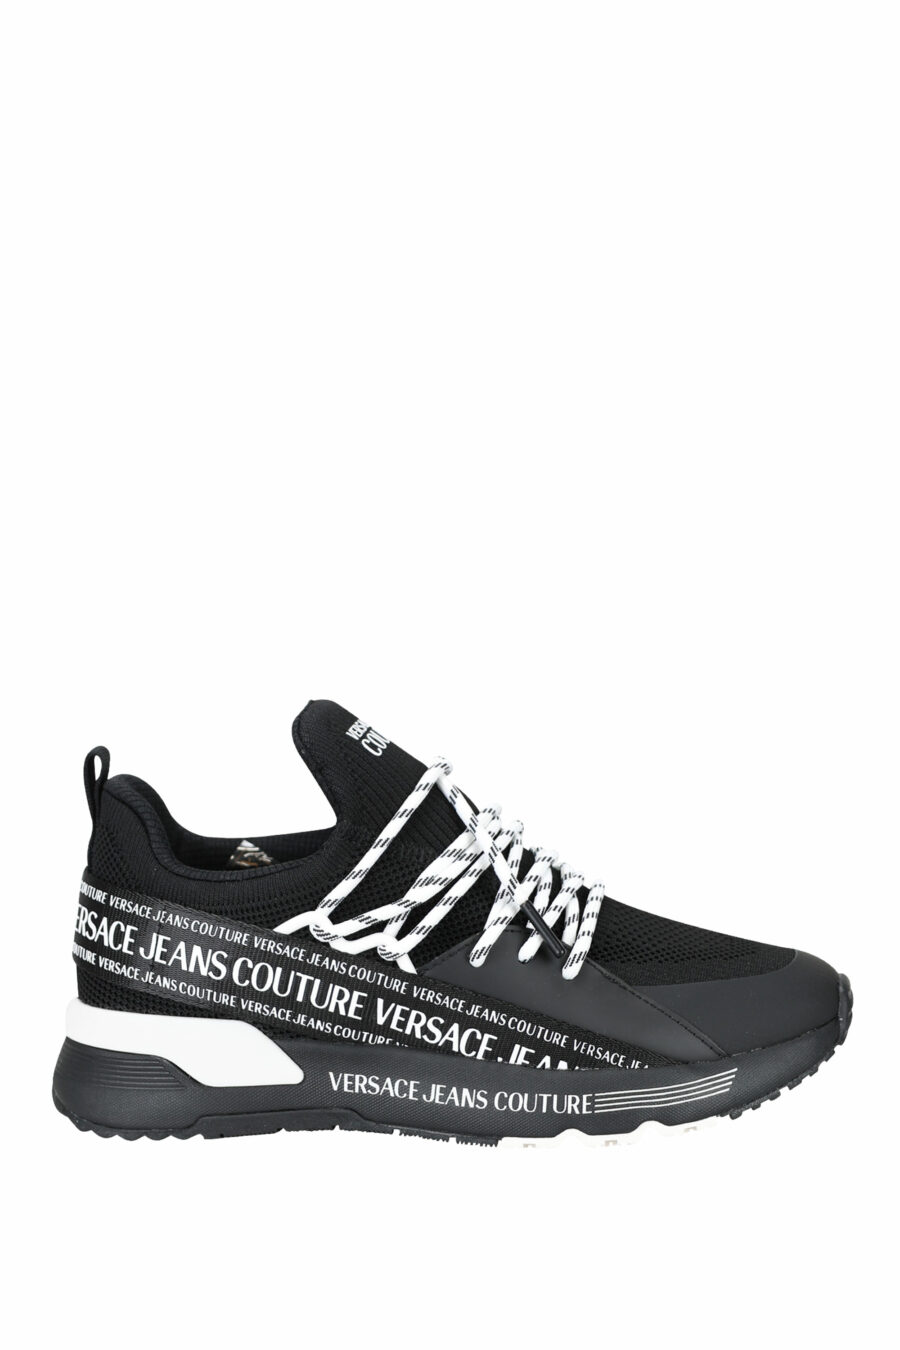 Black "troadlop" trainers with white ribbon logo - 8052019454468 1